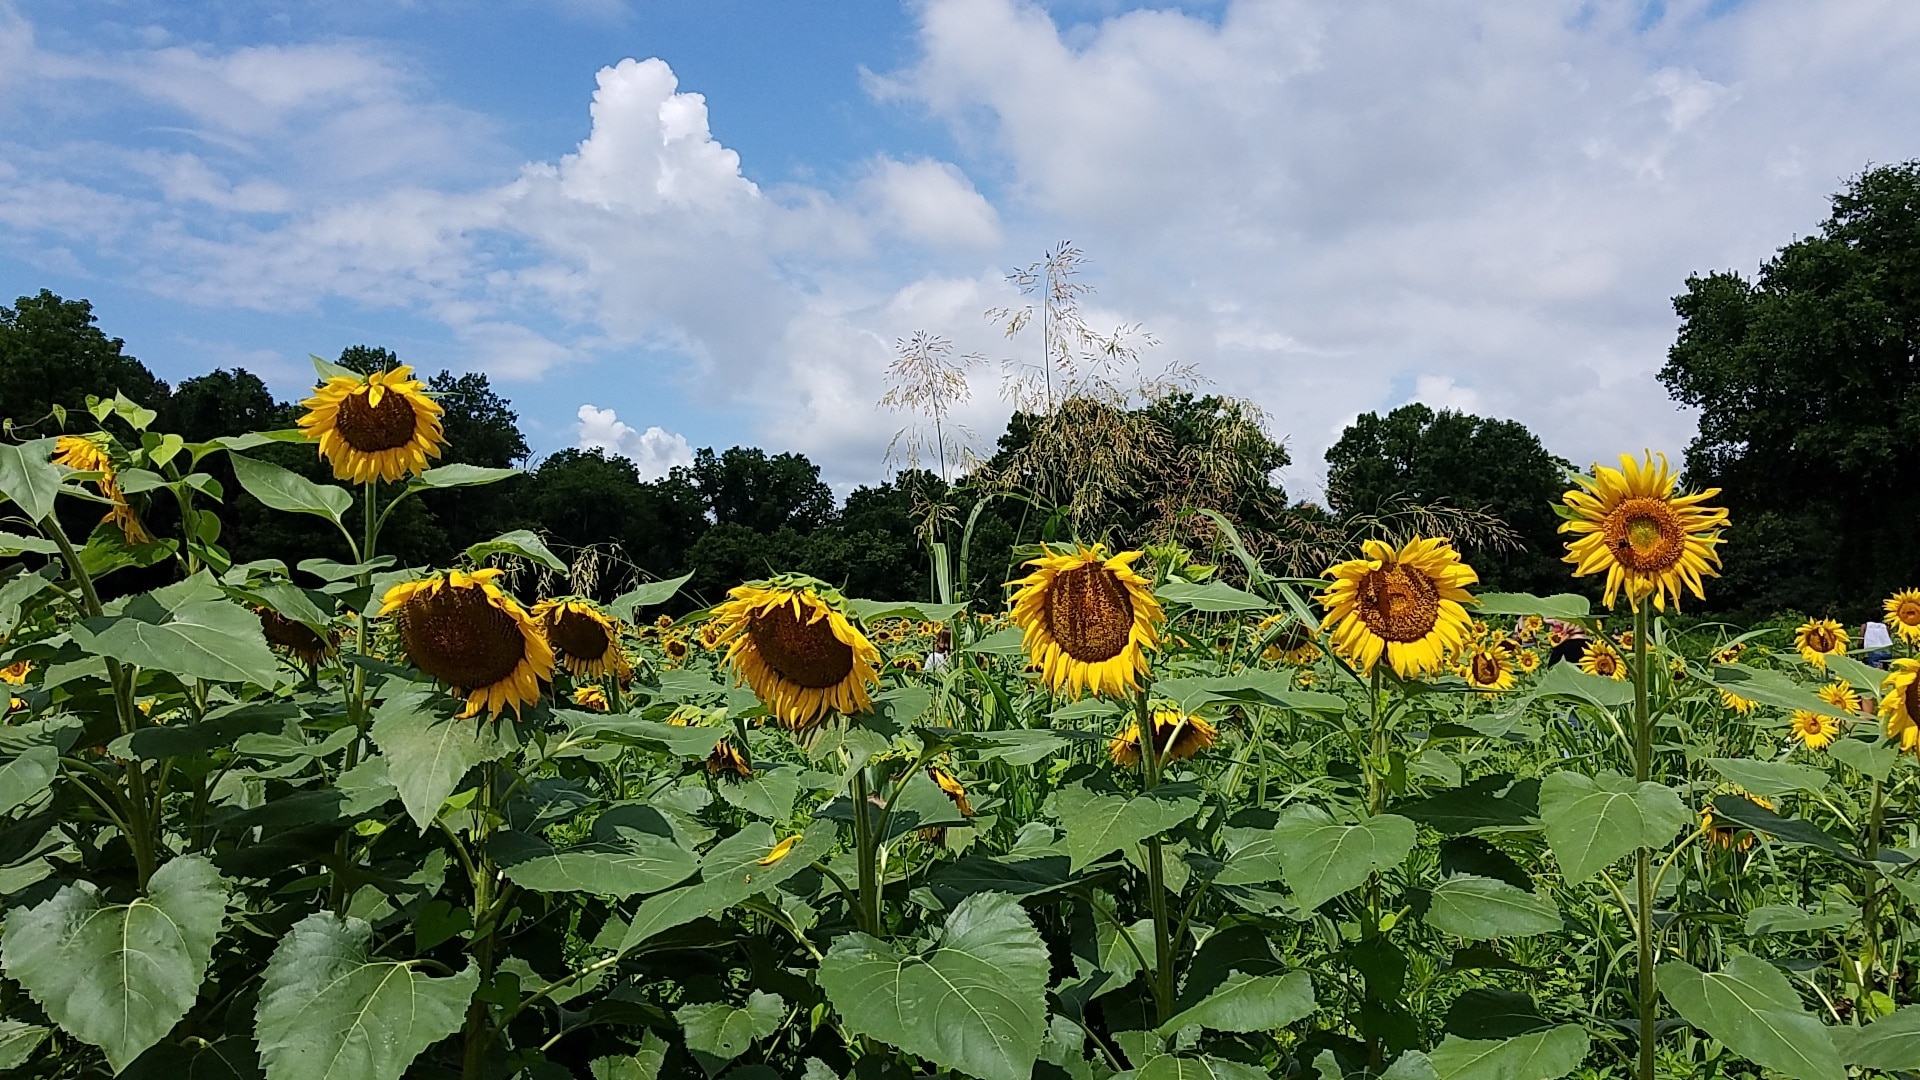 Big field of sunflowers.